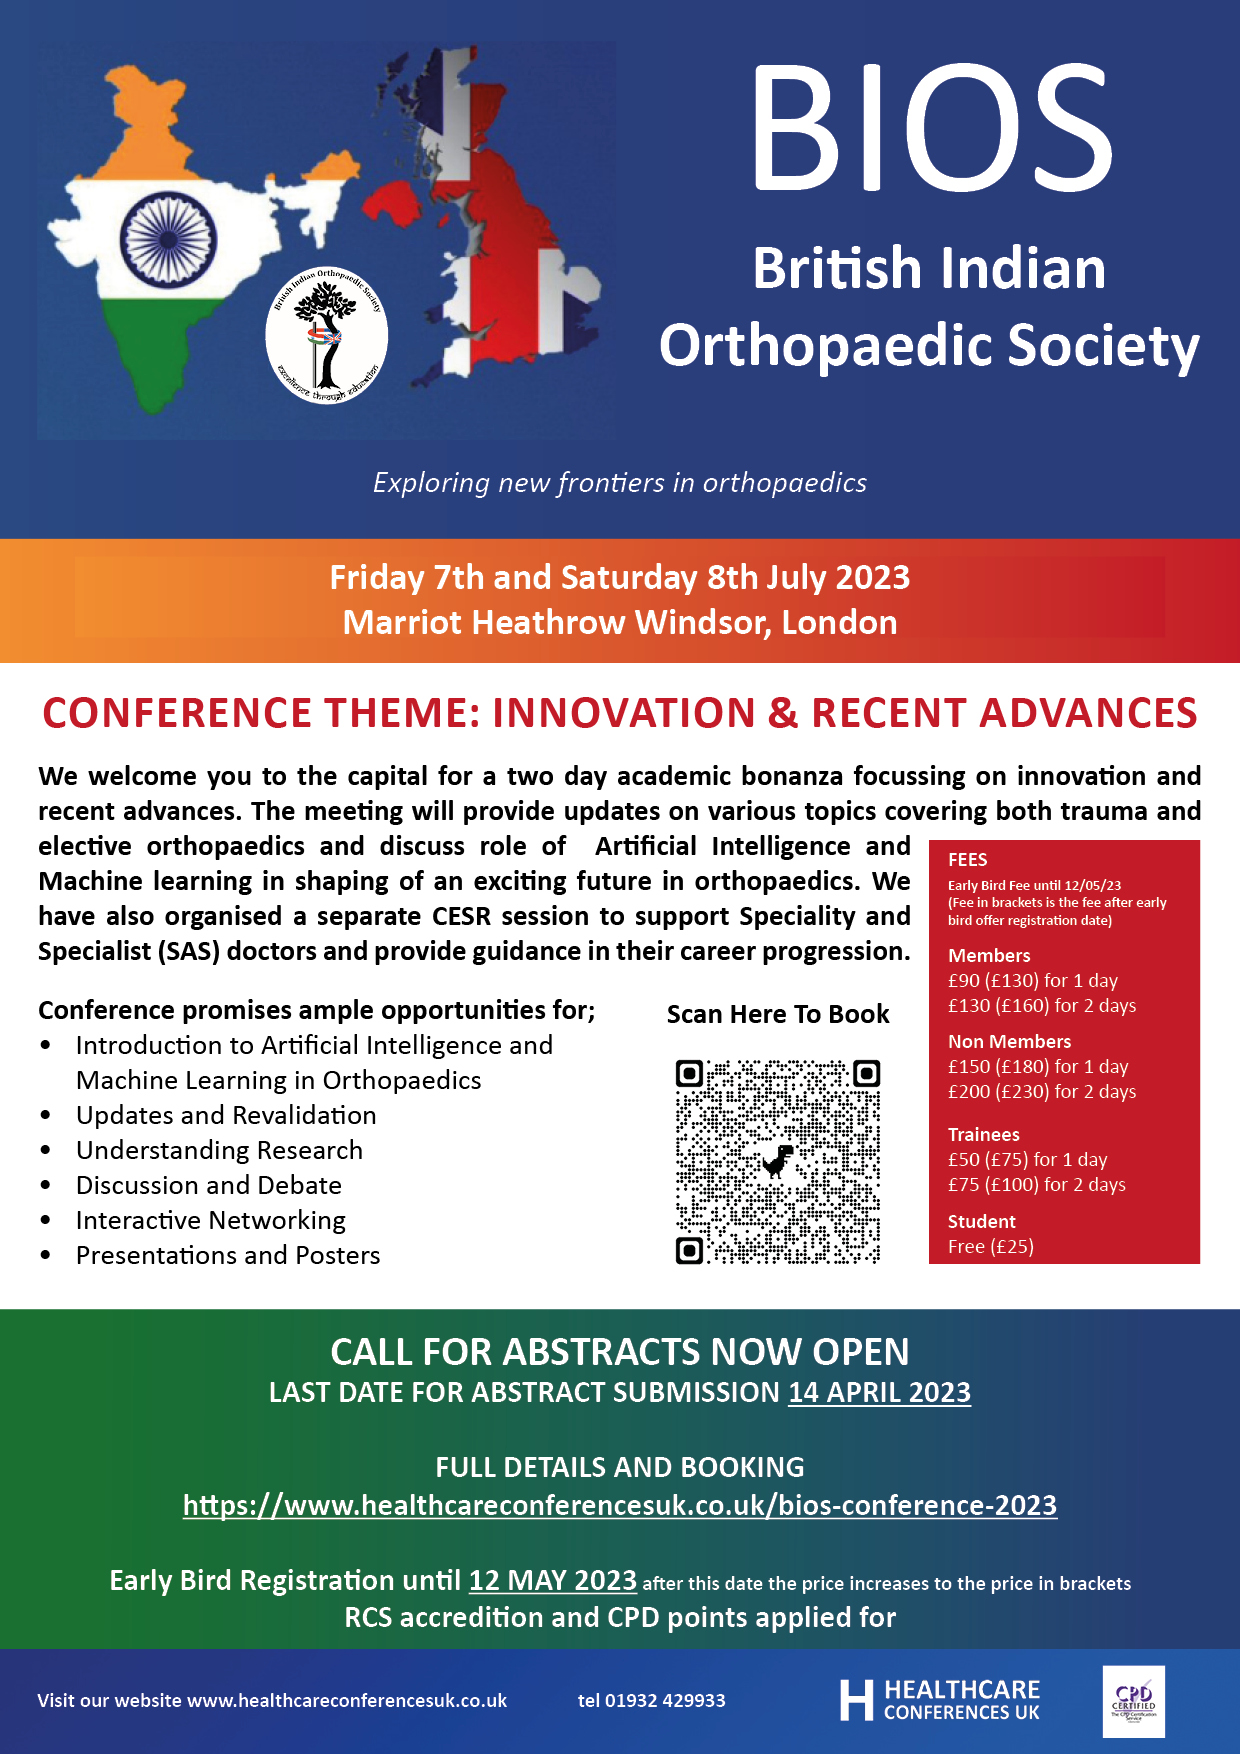 British Indian Orthopaedic Society (BIOS) Conference 2023